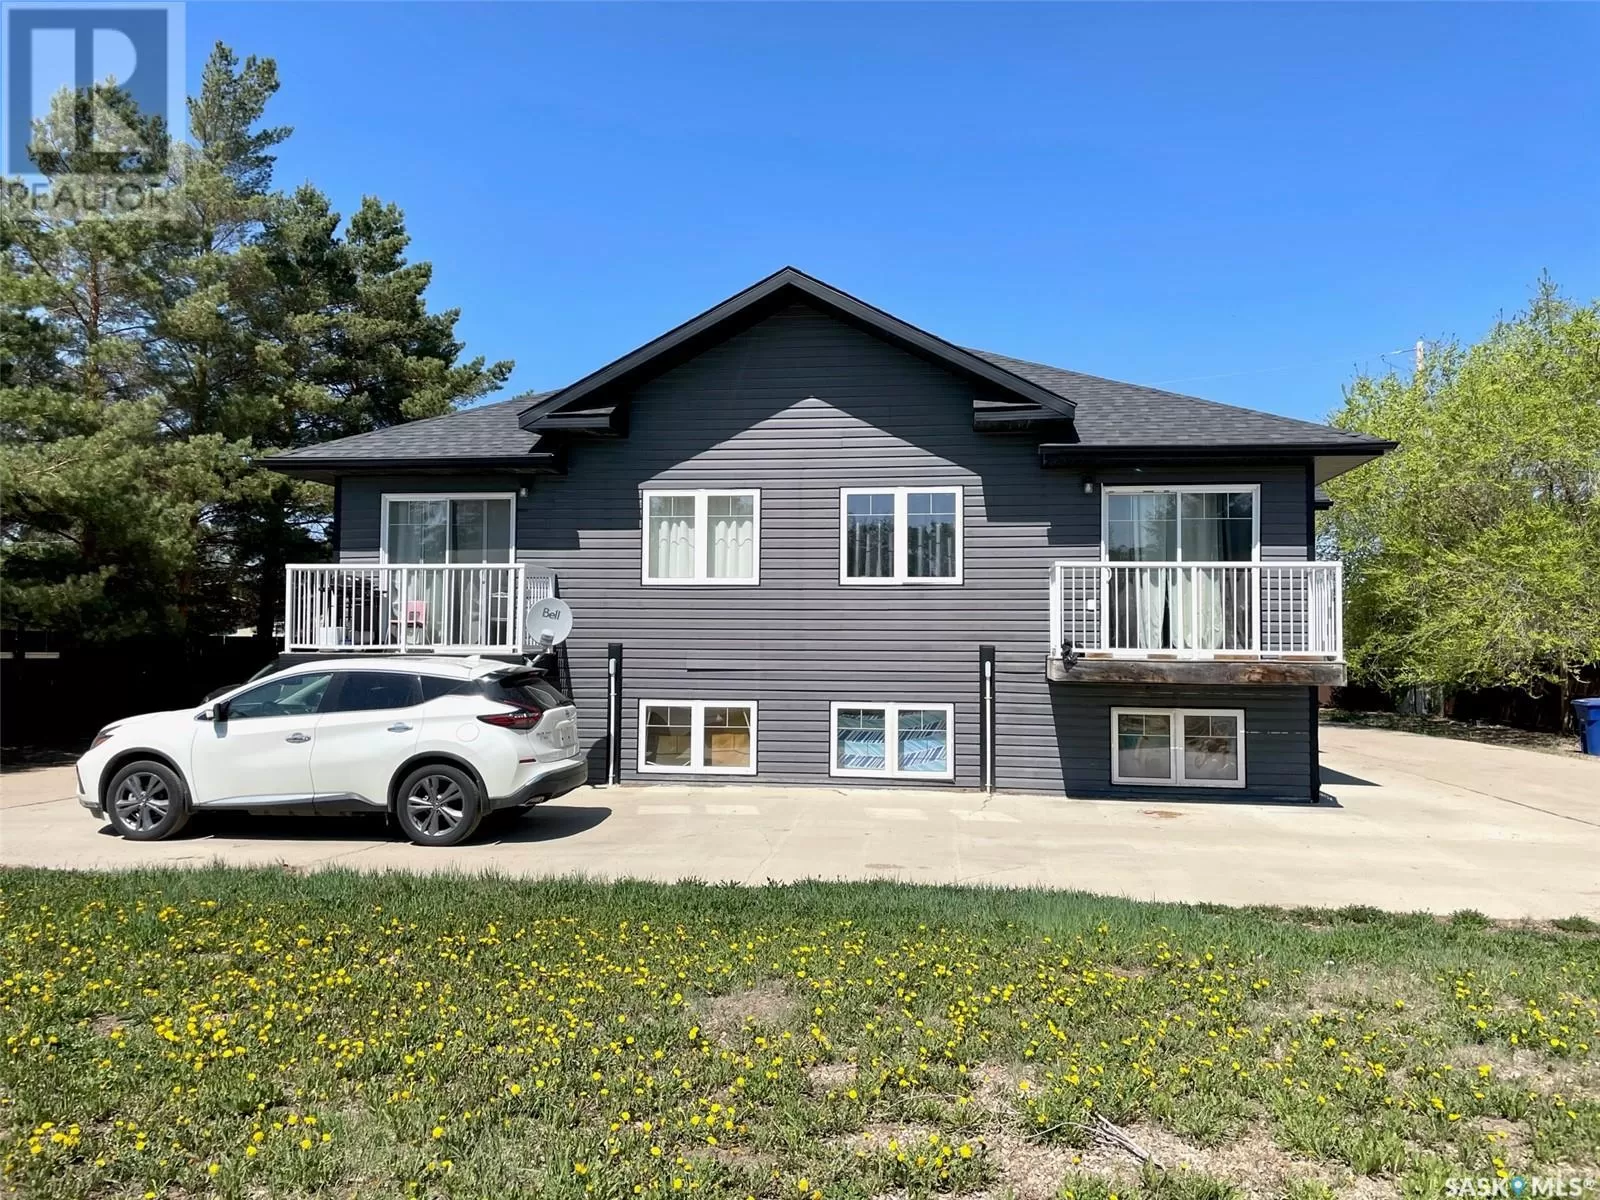 Fourplex for rent: 342 30th Street, Battleford, Saskatchewan S0M 0E0